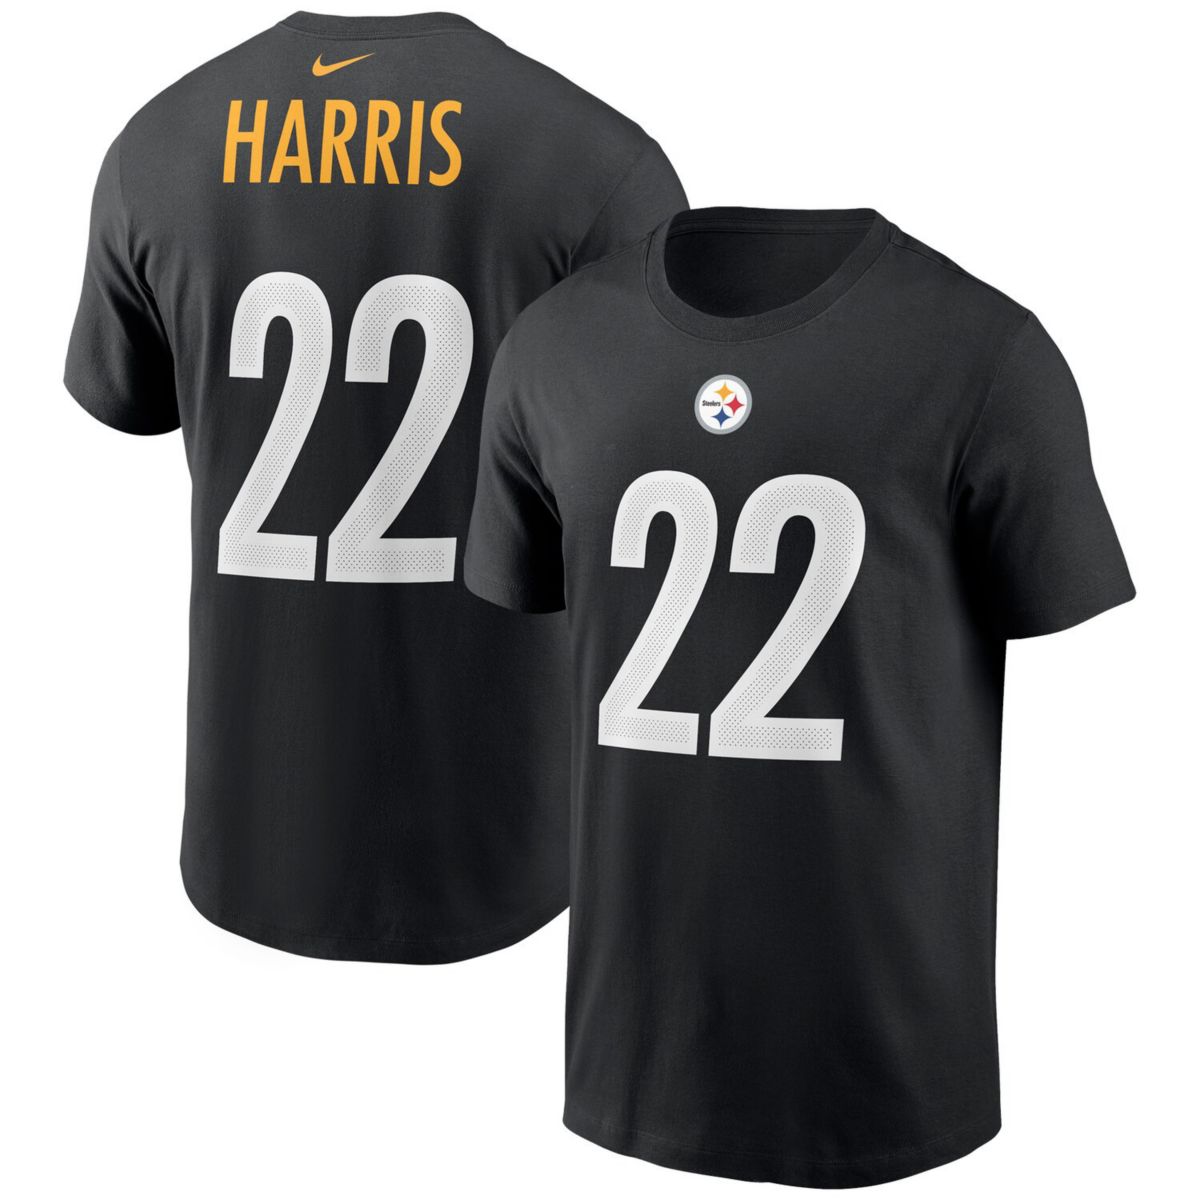 Мужская футболка Nike Najee Harris Black Pittsburgh Steelers с именем и номером игрока Nitro USA